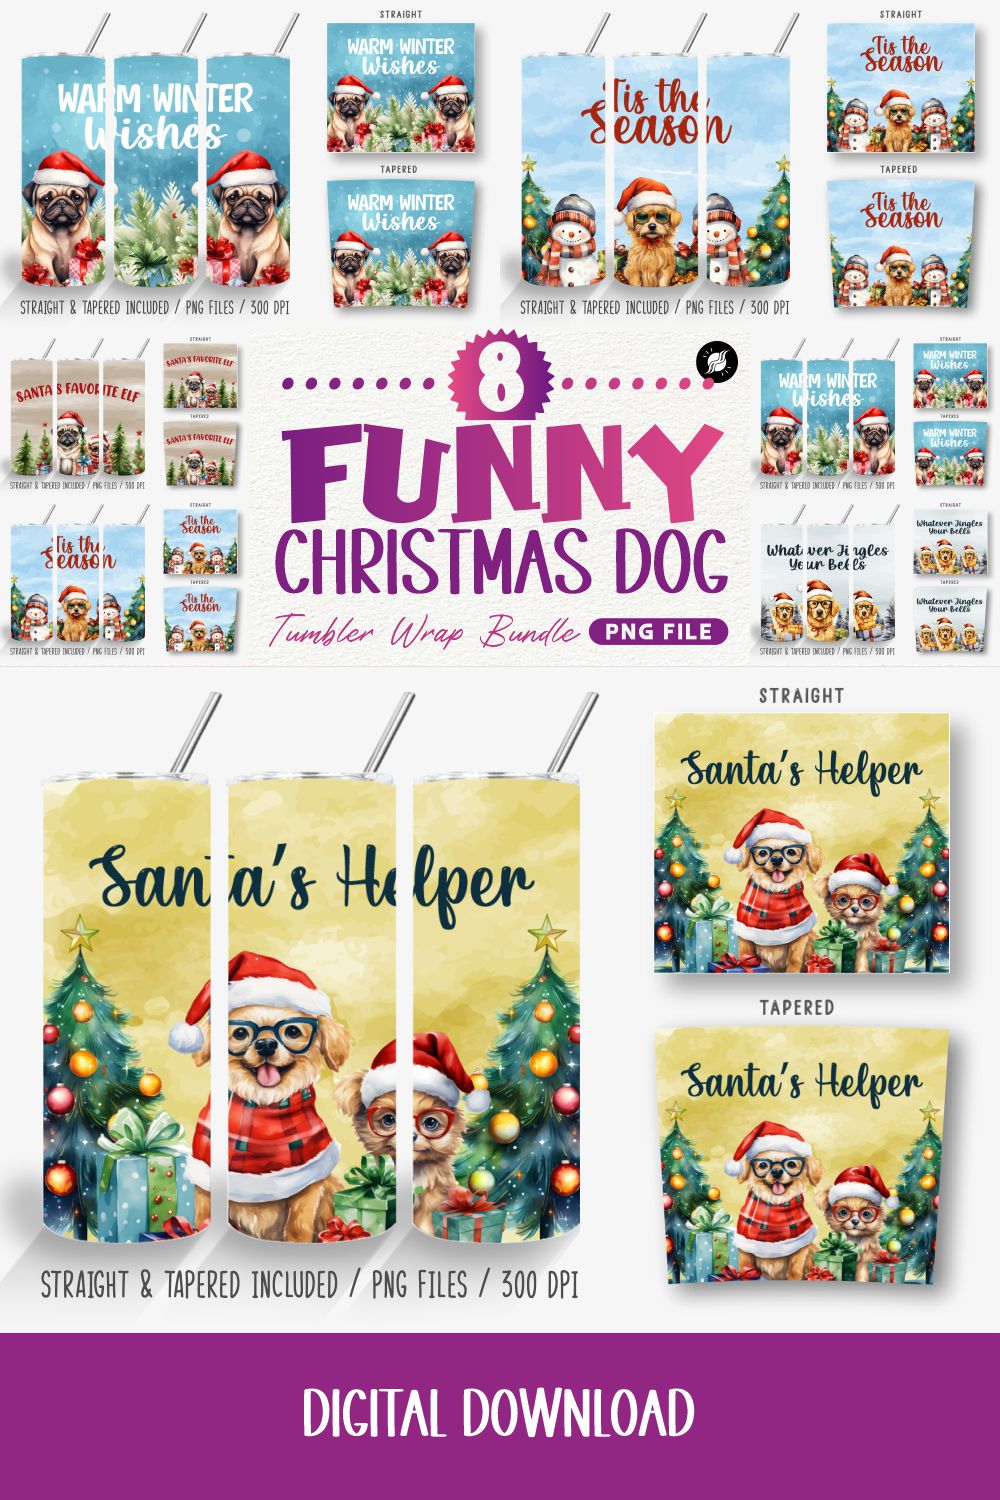 Funny Christmas Dog Tumbler Wrap Bundle pinterest preview image.